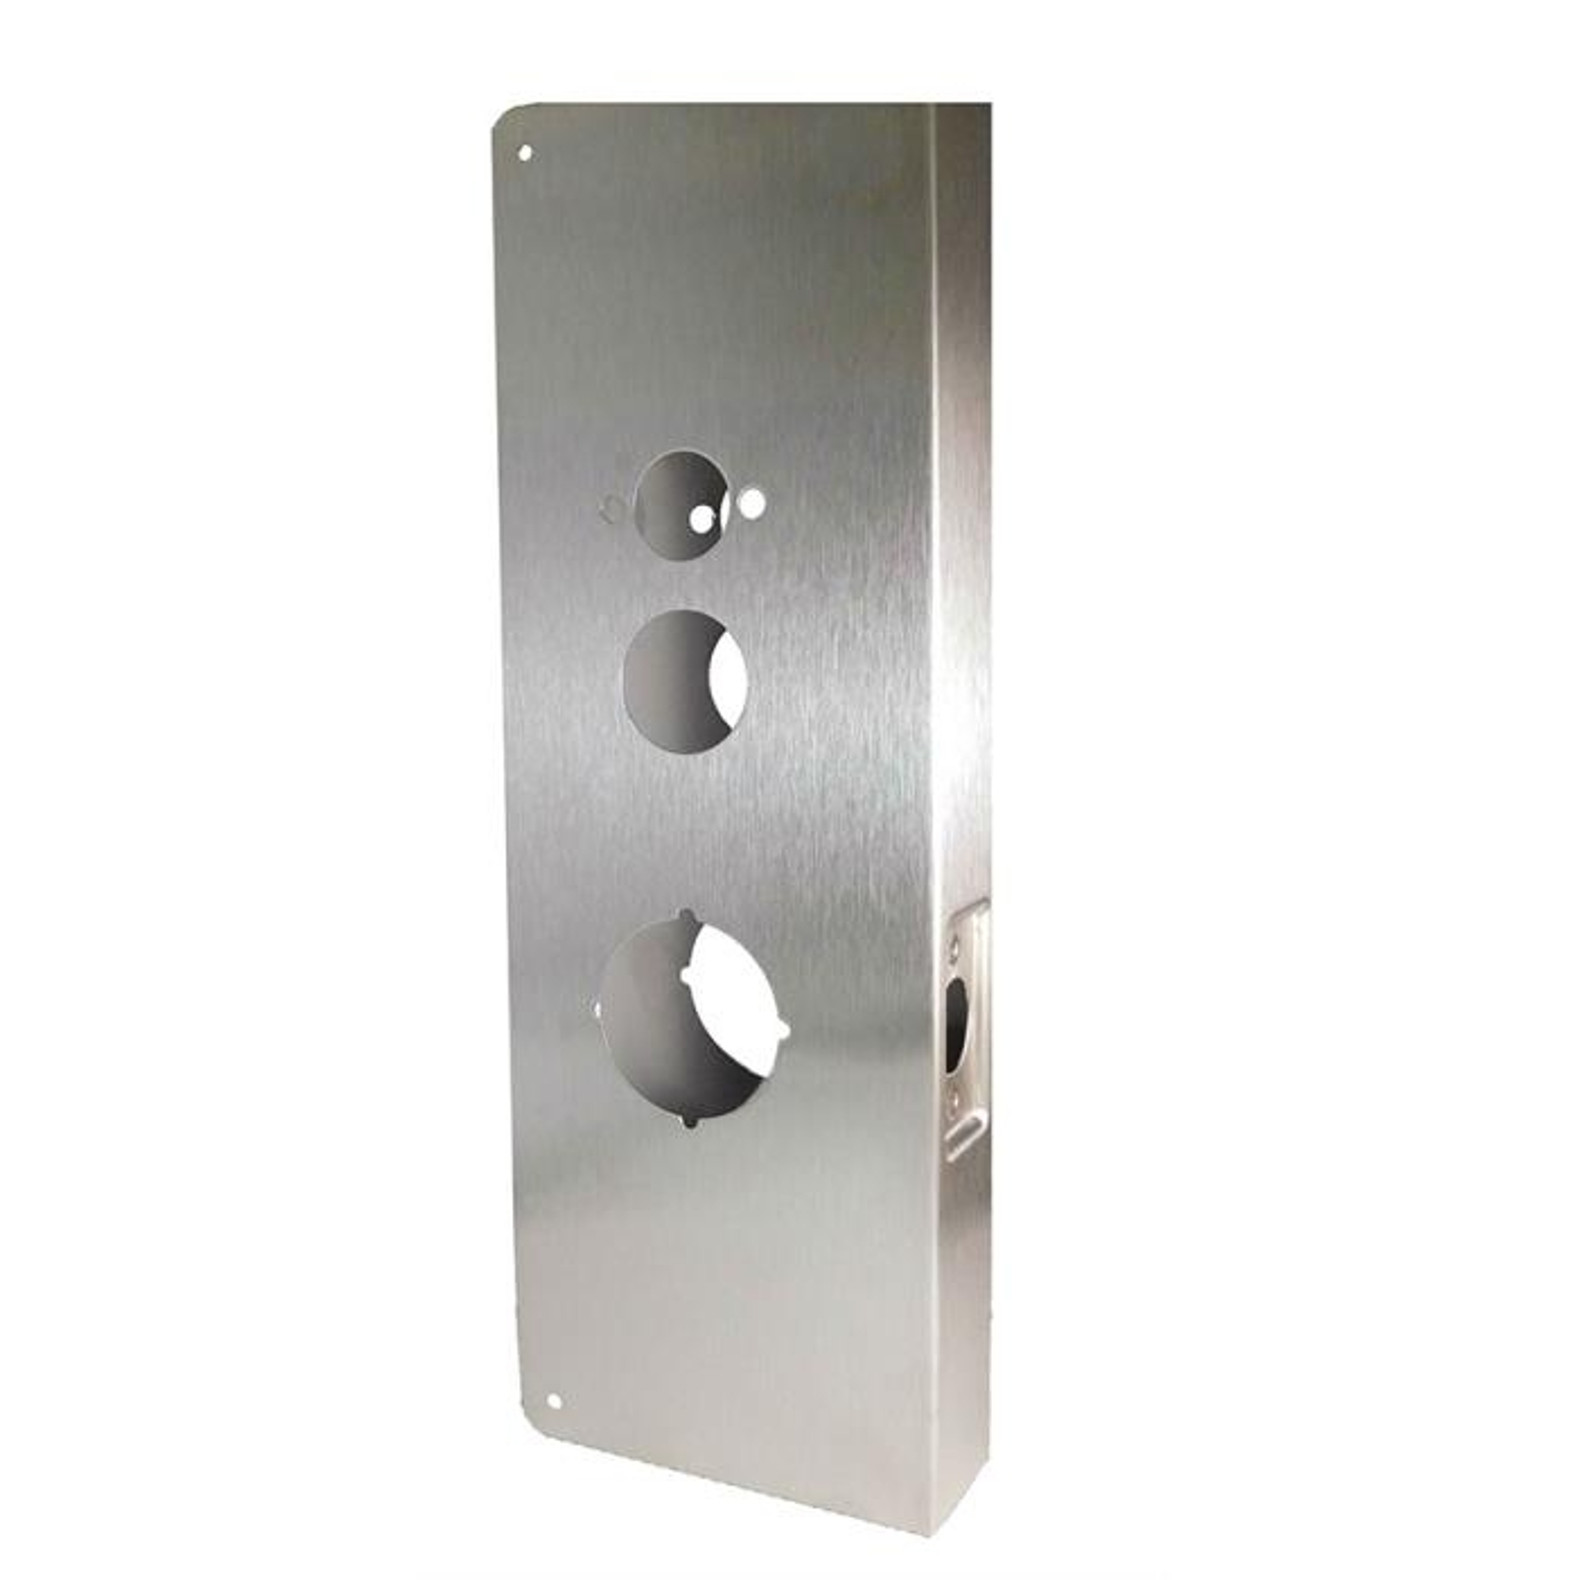 General Lock Remodeling Wrap-Around Plate for Kaba Simplex 1000, 2-3/4"  Backset, 1-3/4" Door, 5" Wide X 15" High, US32D KAL DOOR HARDWARE